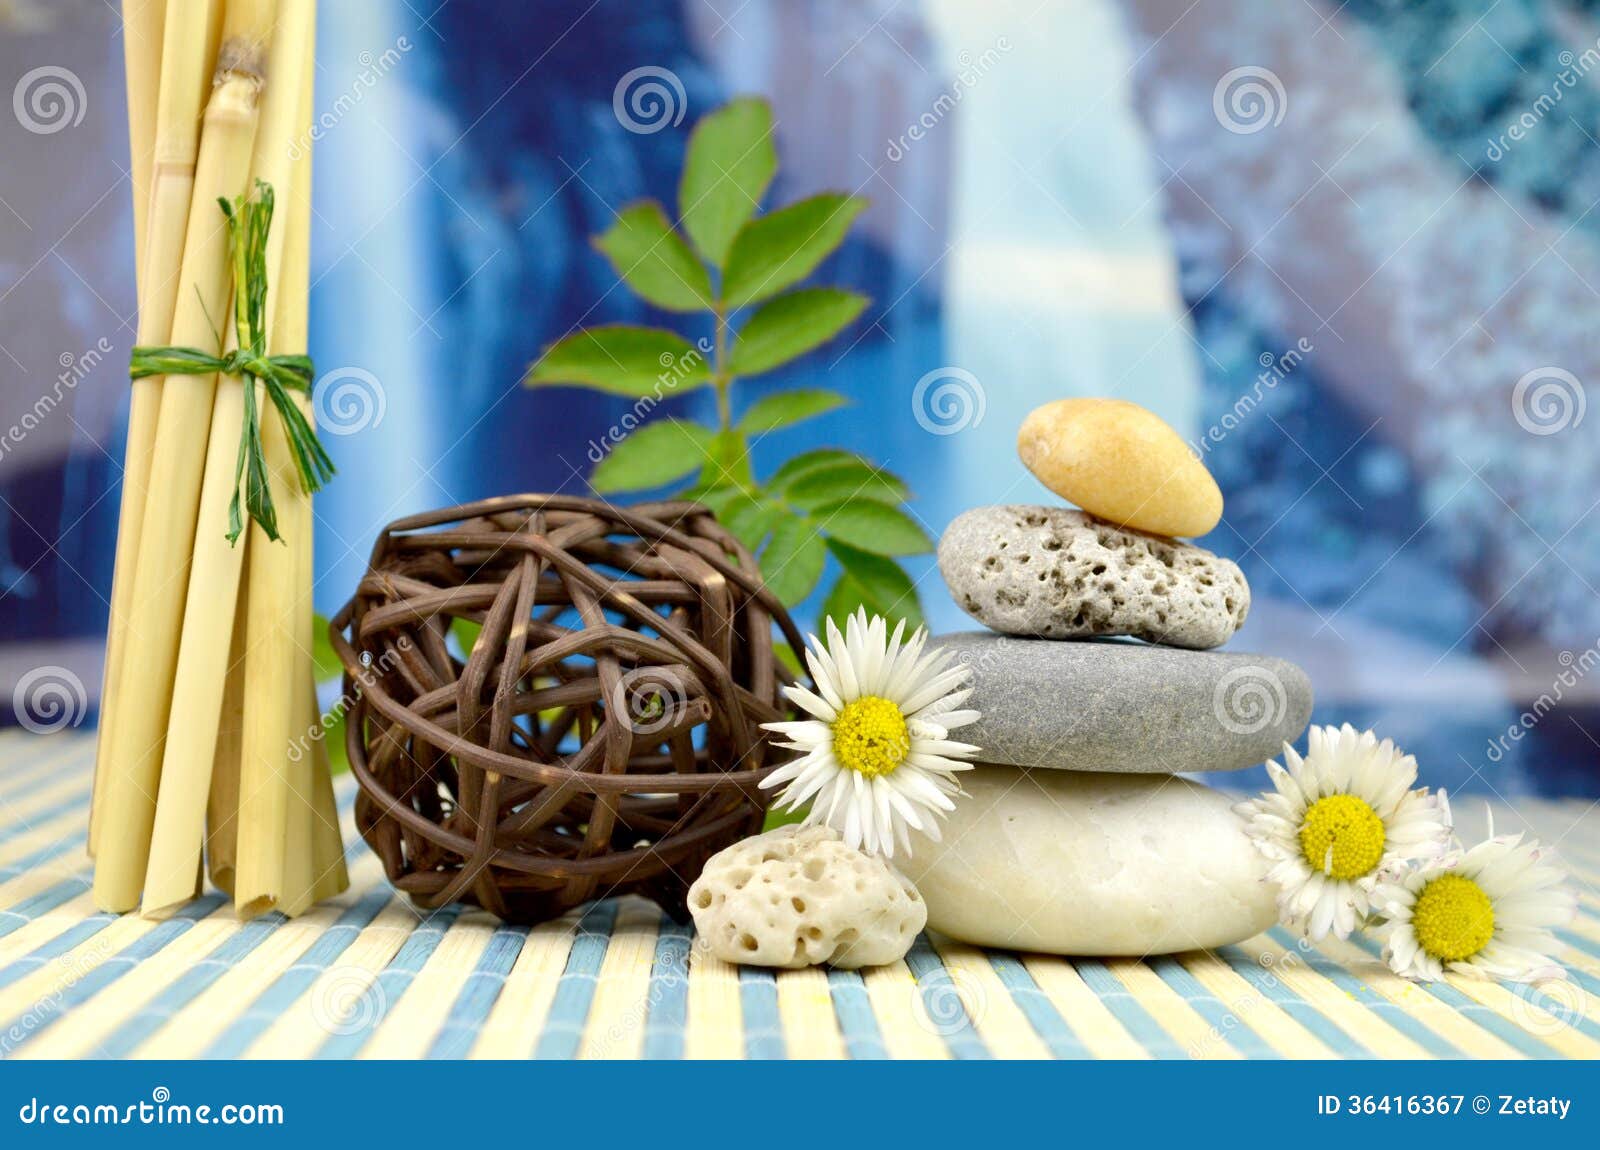 Spa stones stock image. Image of arrangement, bloom, alternative - 36416367